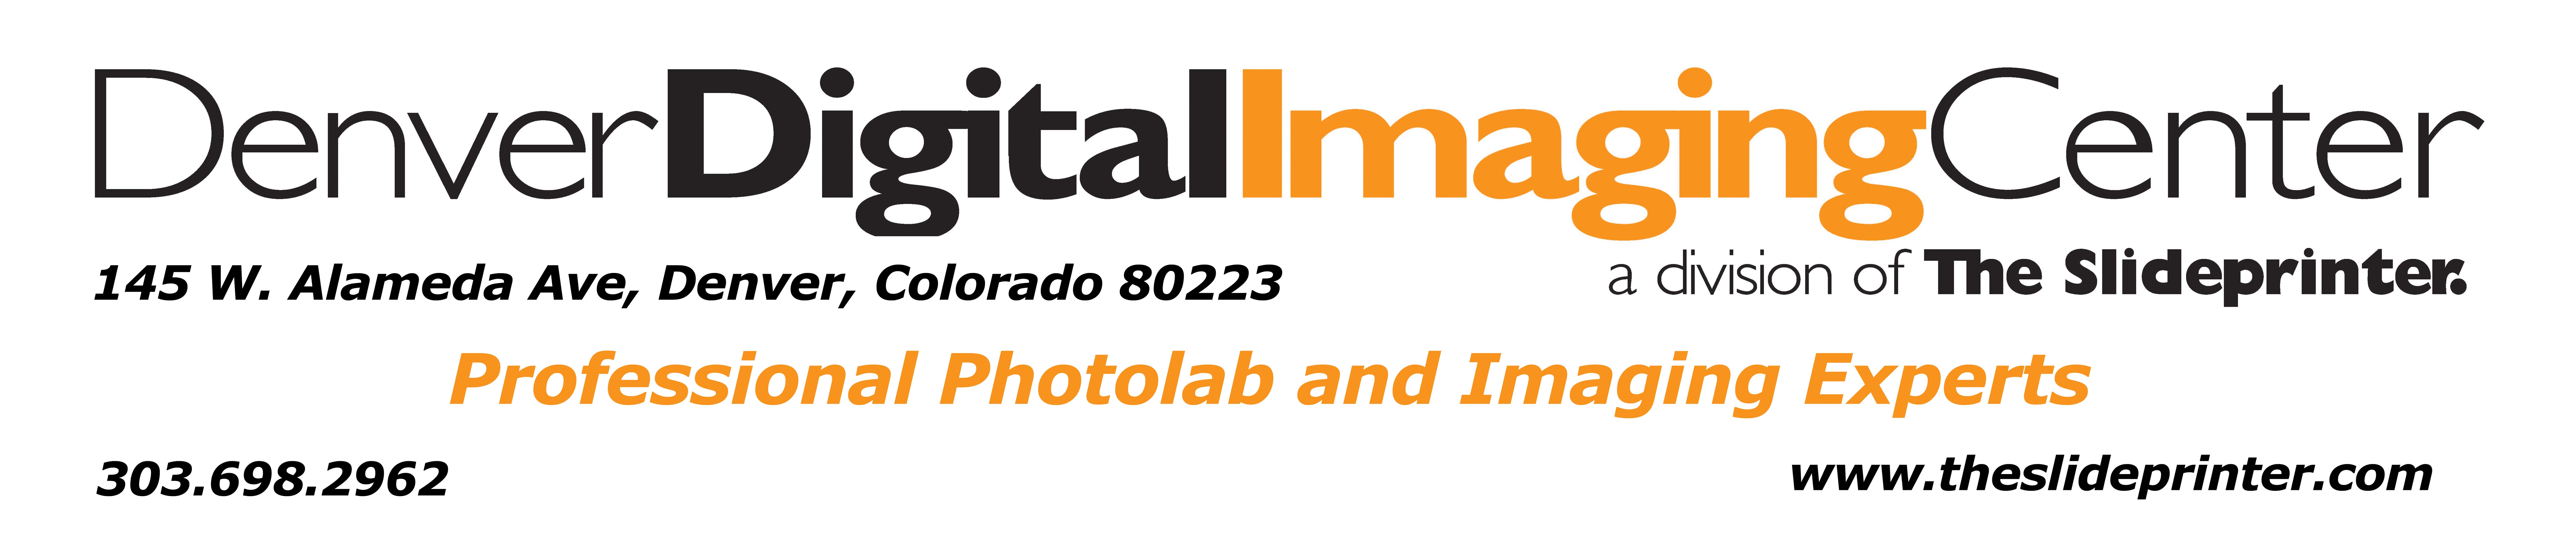 Denver Digital Imaging Company logo